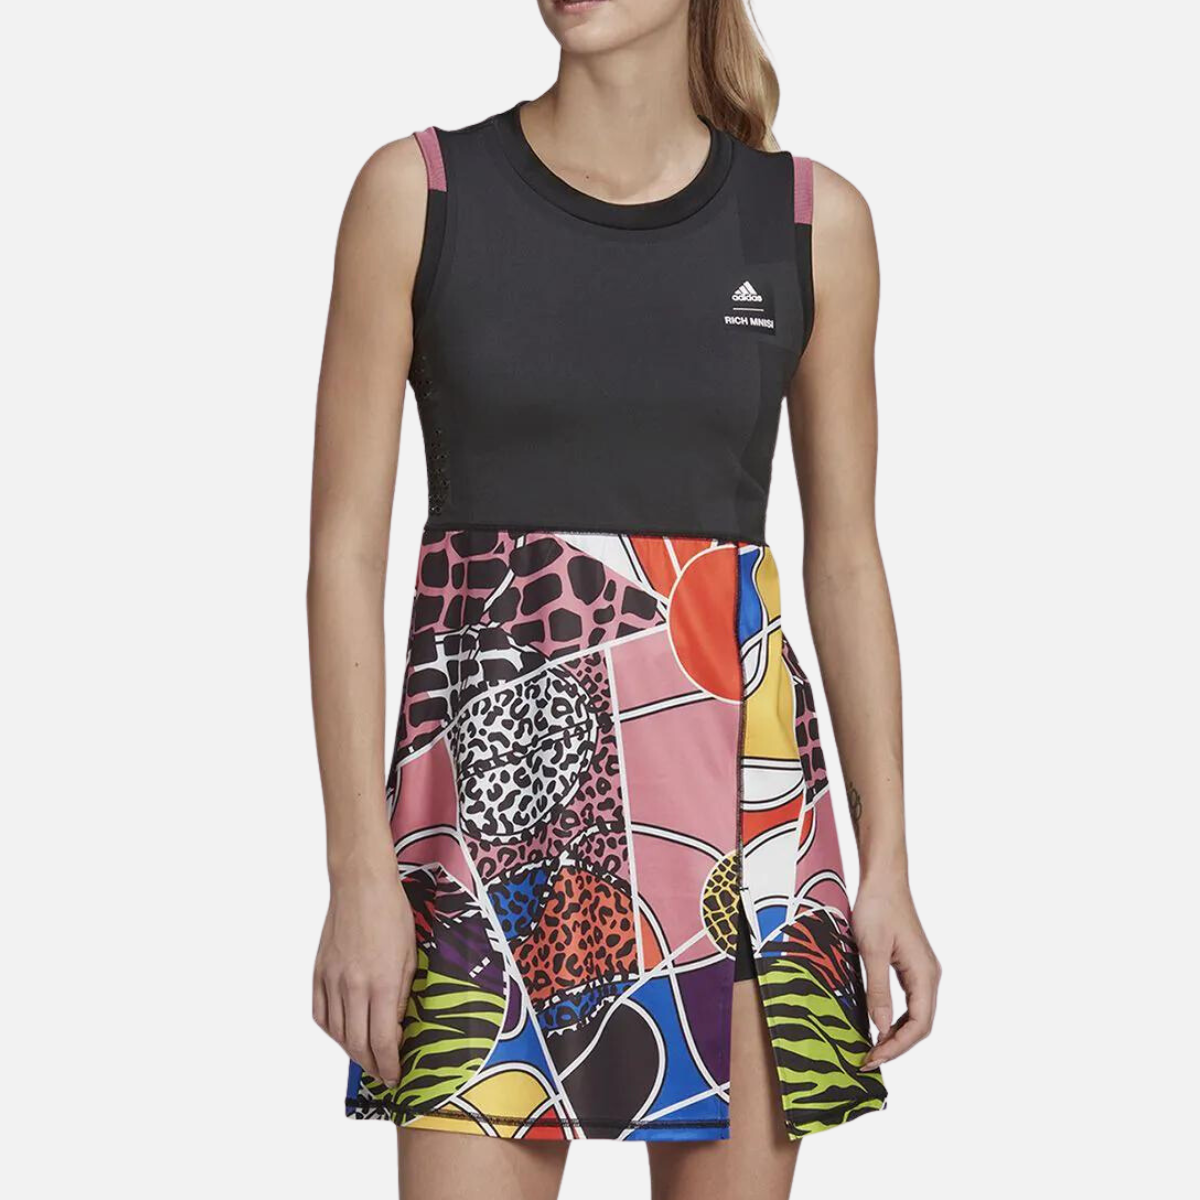 Adidas Rich Manisi Tennis Primeknit Dress -Black